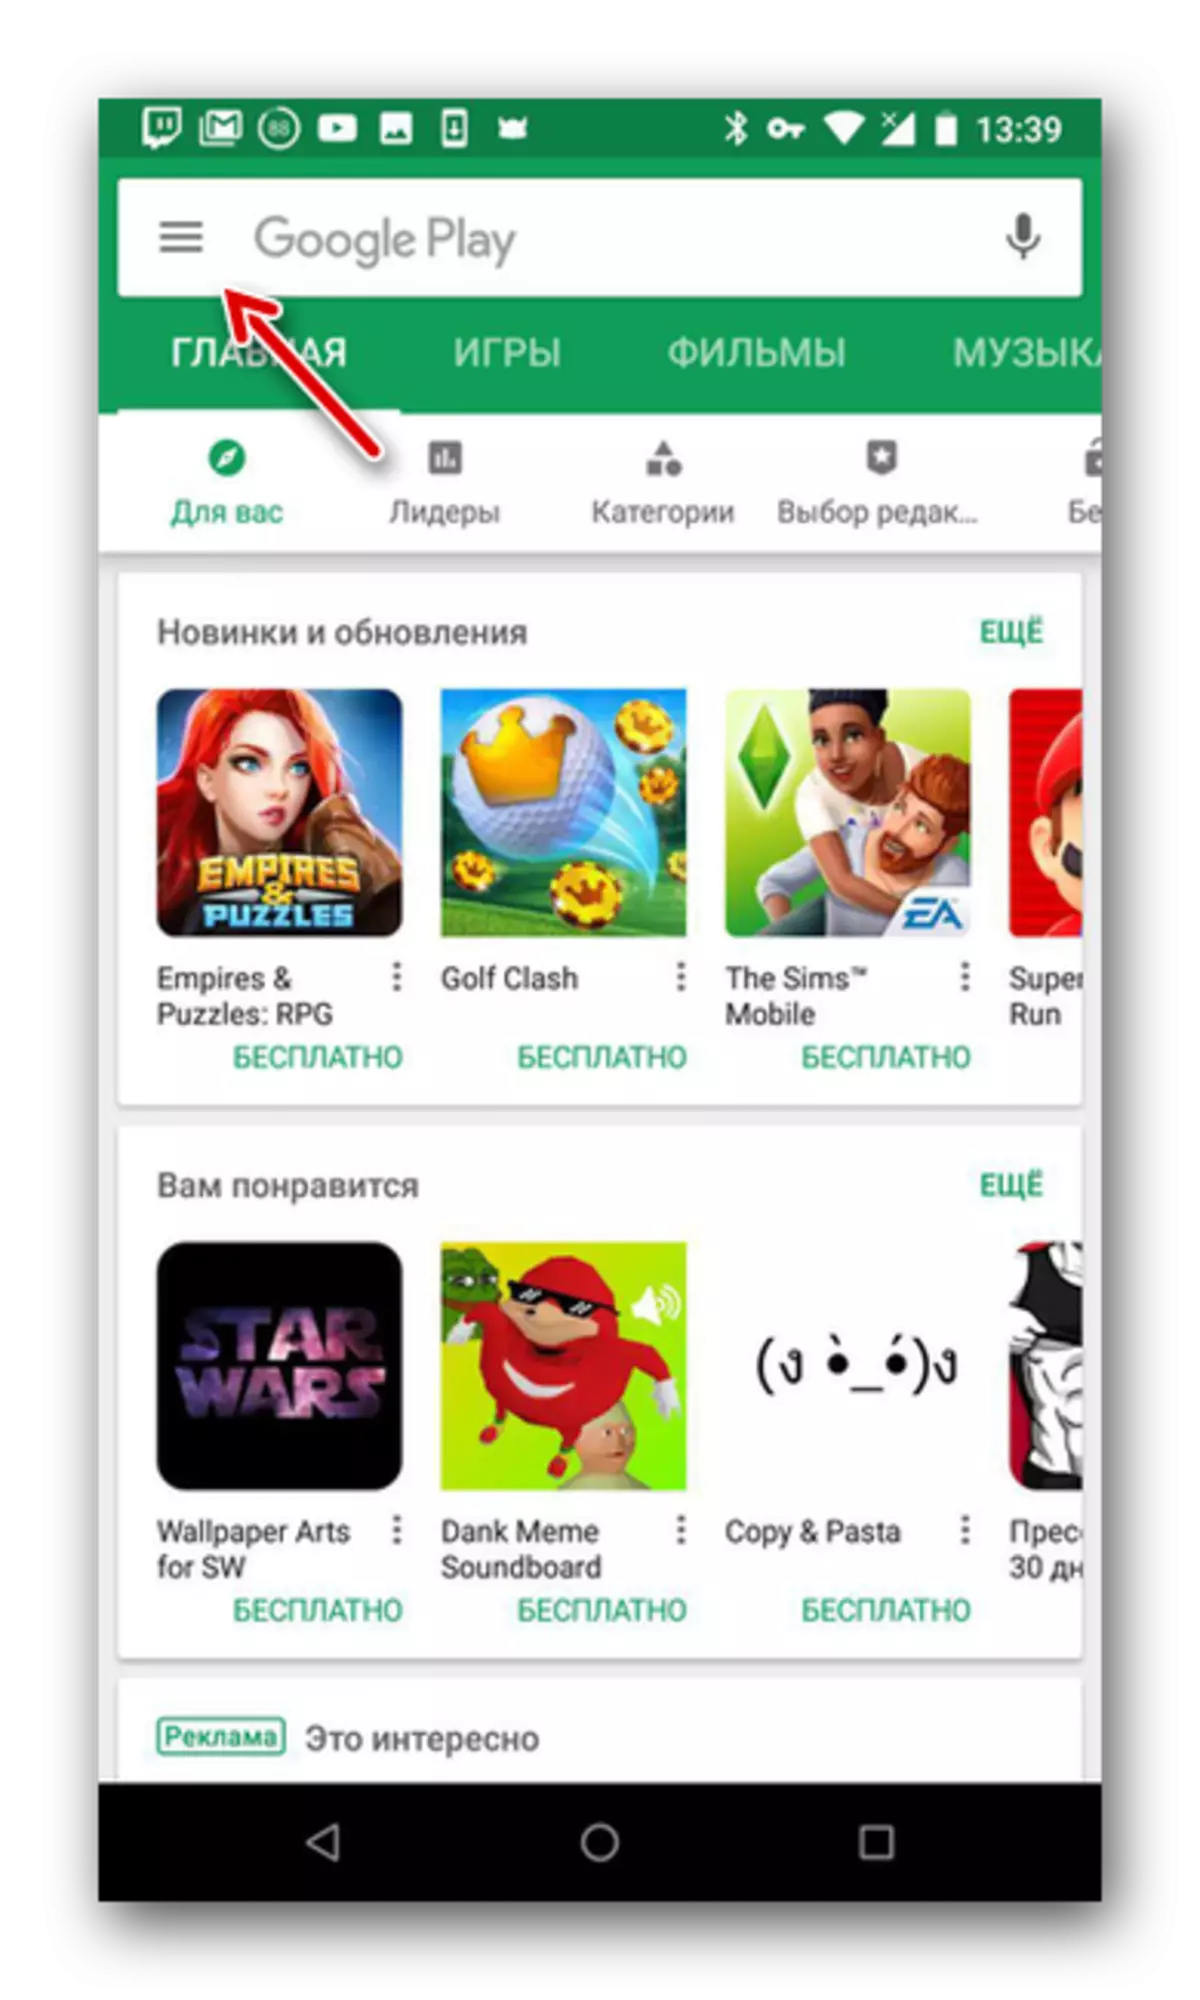 Google Play Market Menu